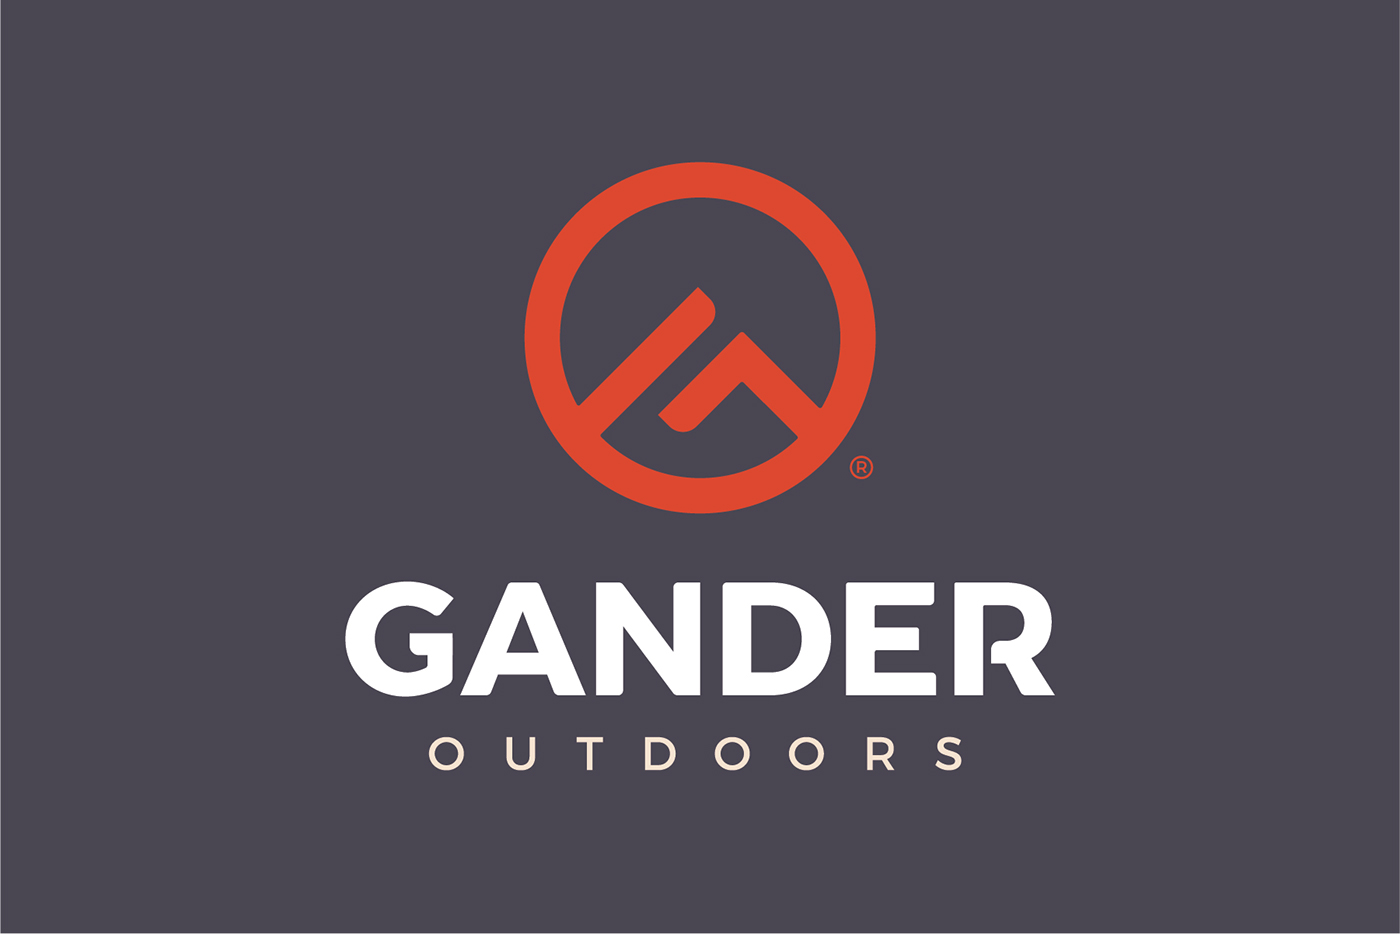 Gander Outdoors on Behance